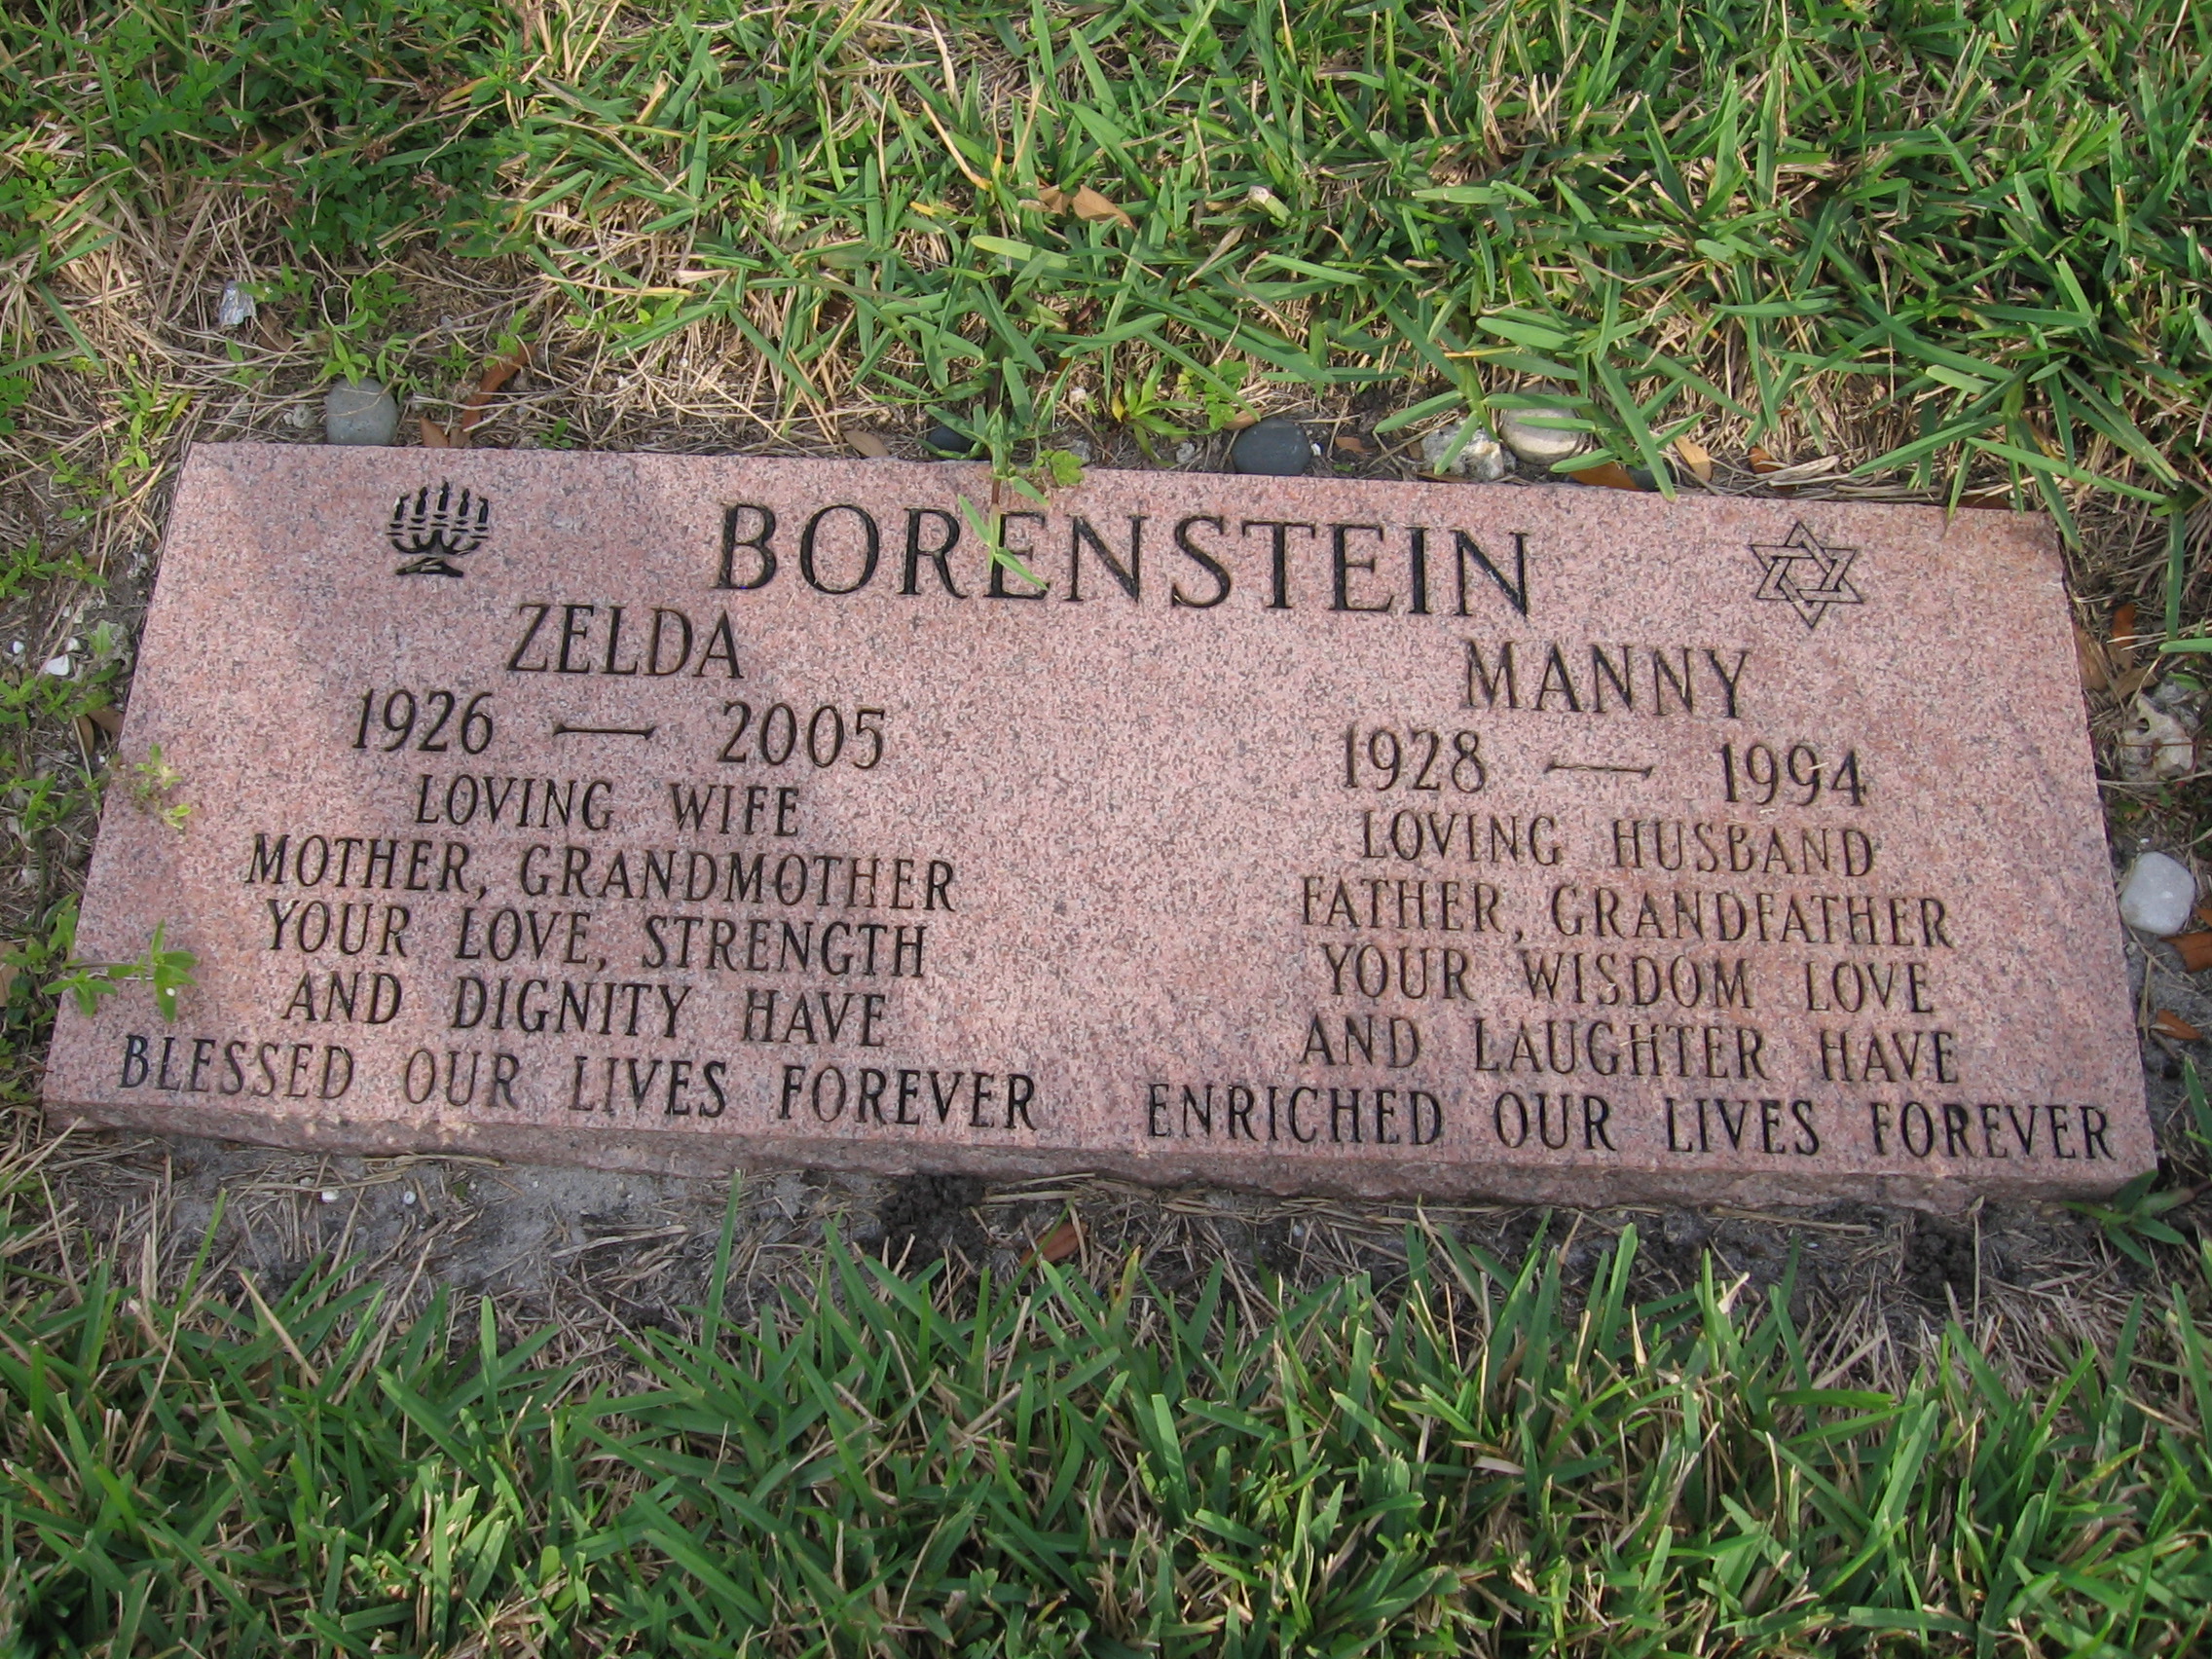 Zelda Borenstein